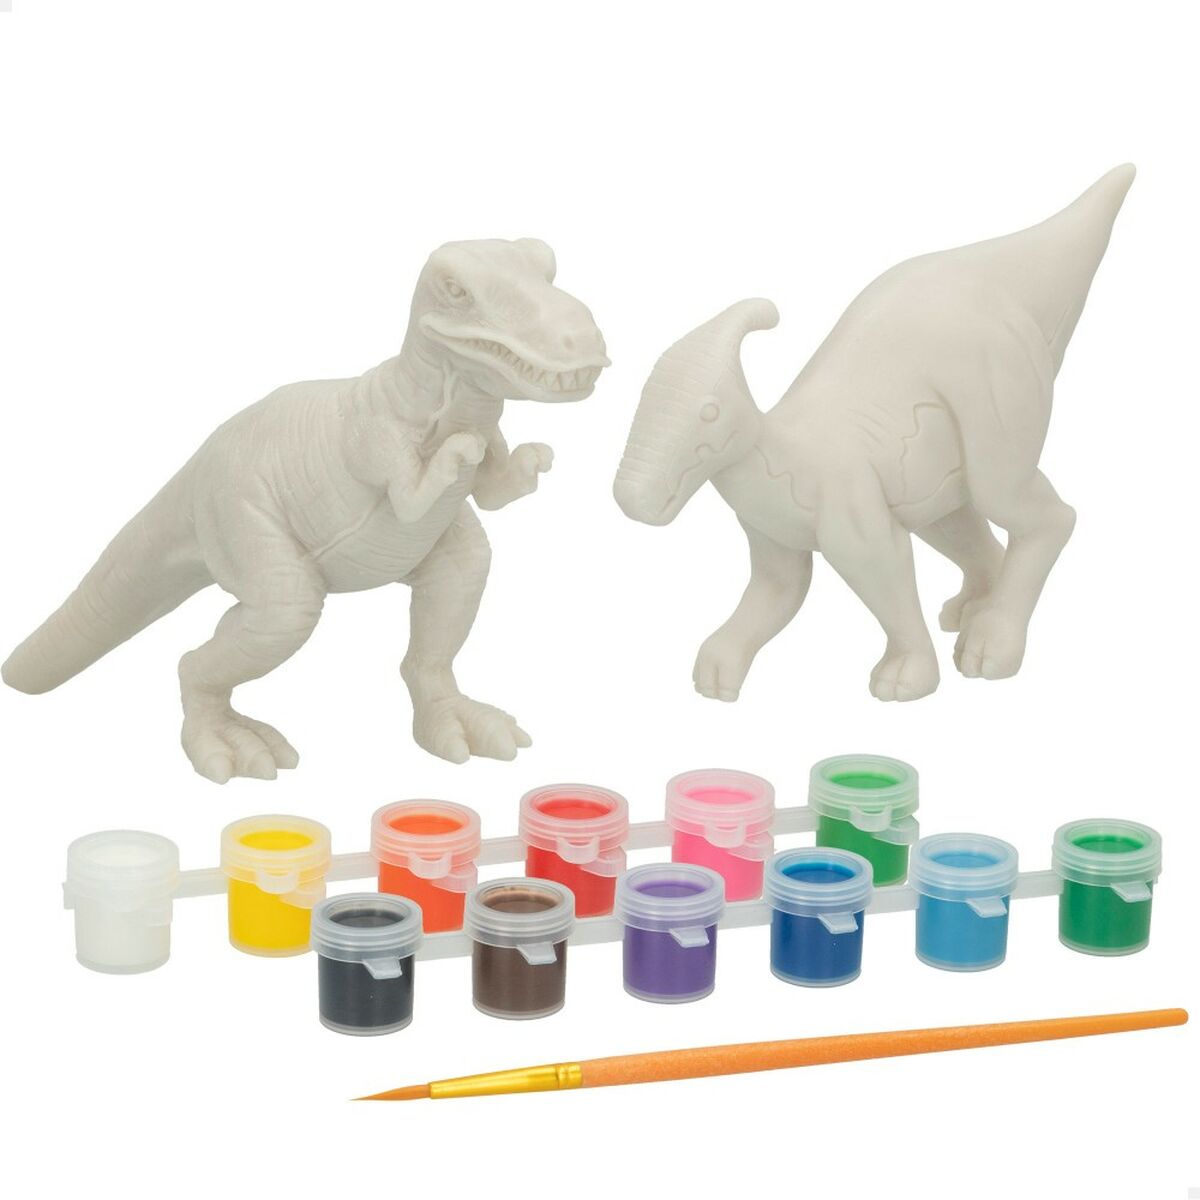 Set 2 Dinosaurier PlayGo 15 Stücke 6 Stück 14,5 x 9,5 x 5 cm Dinosaurier Zum Malen